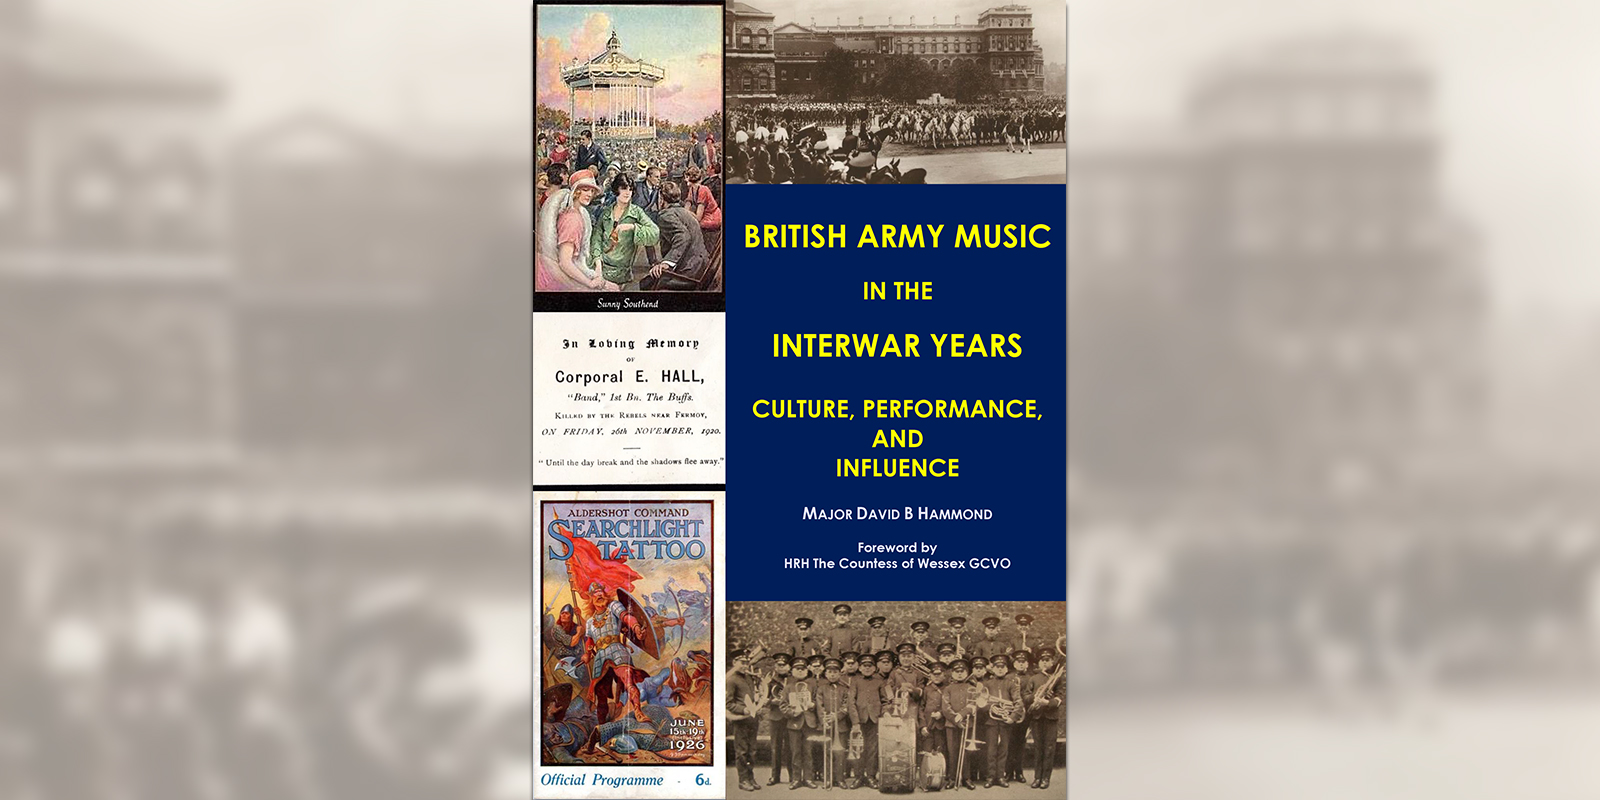 'British Army Music in the Interwar Years' book cover